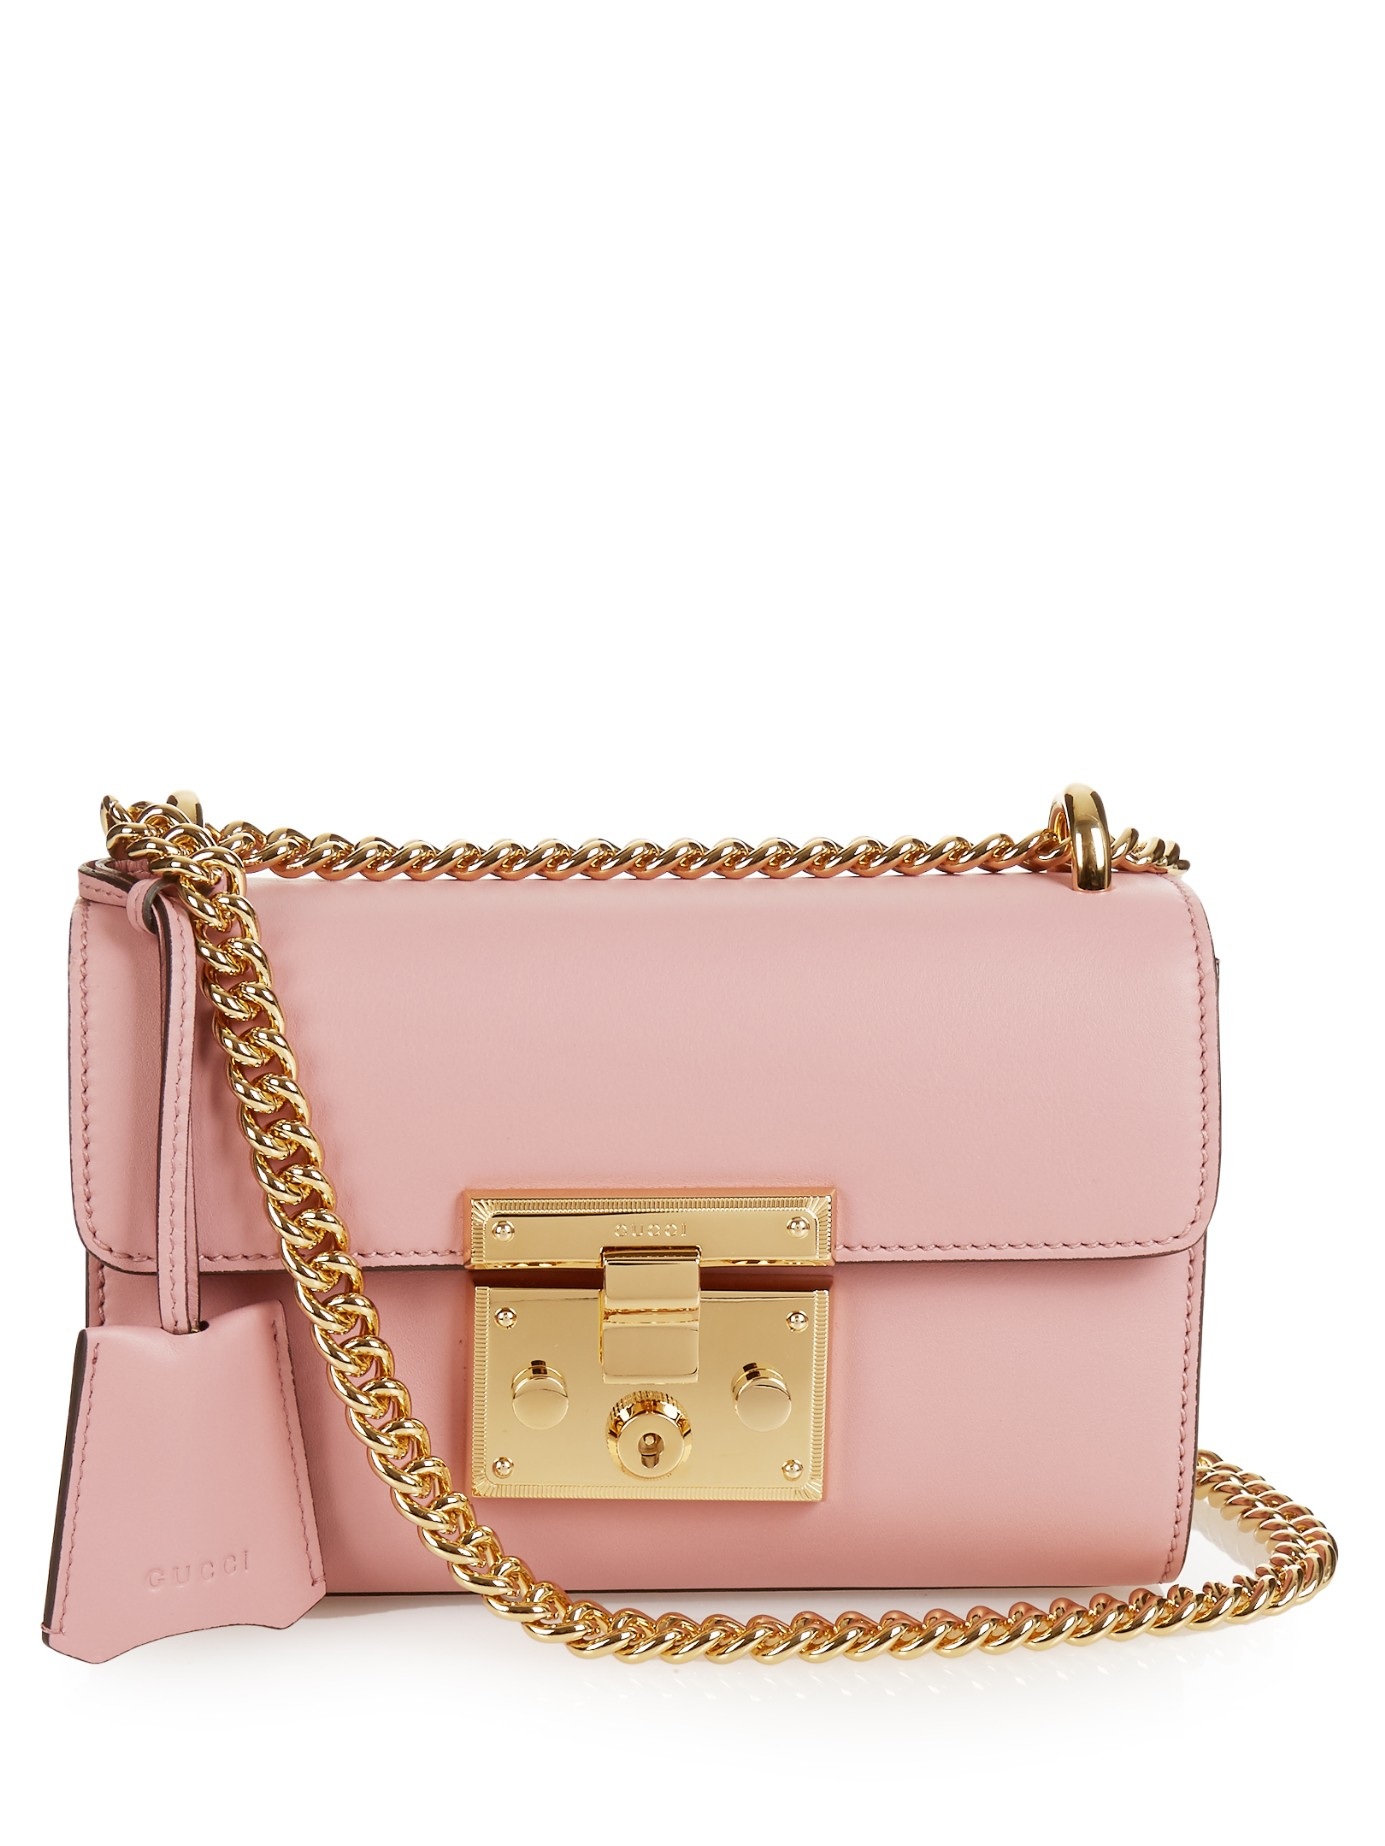 Gucci Padlock Mini Leather Shoulder Bag in Pink | Lyst